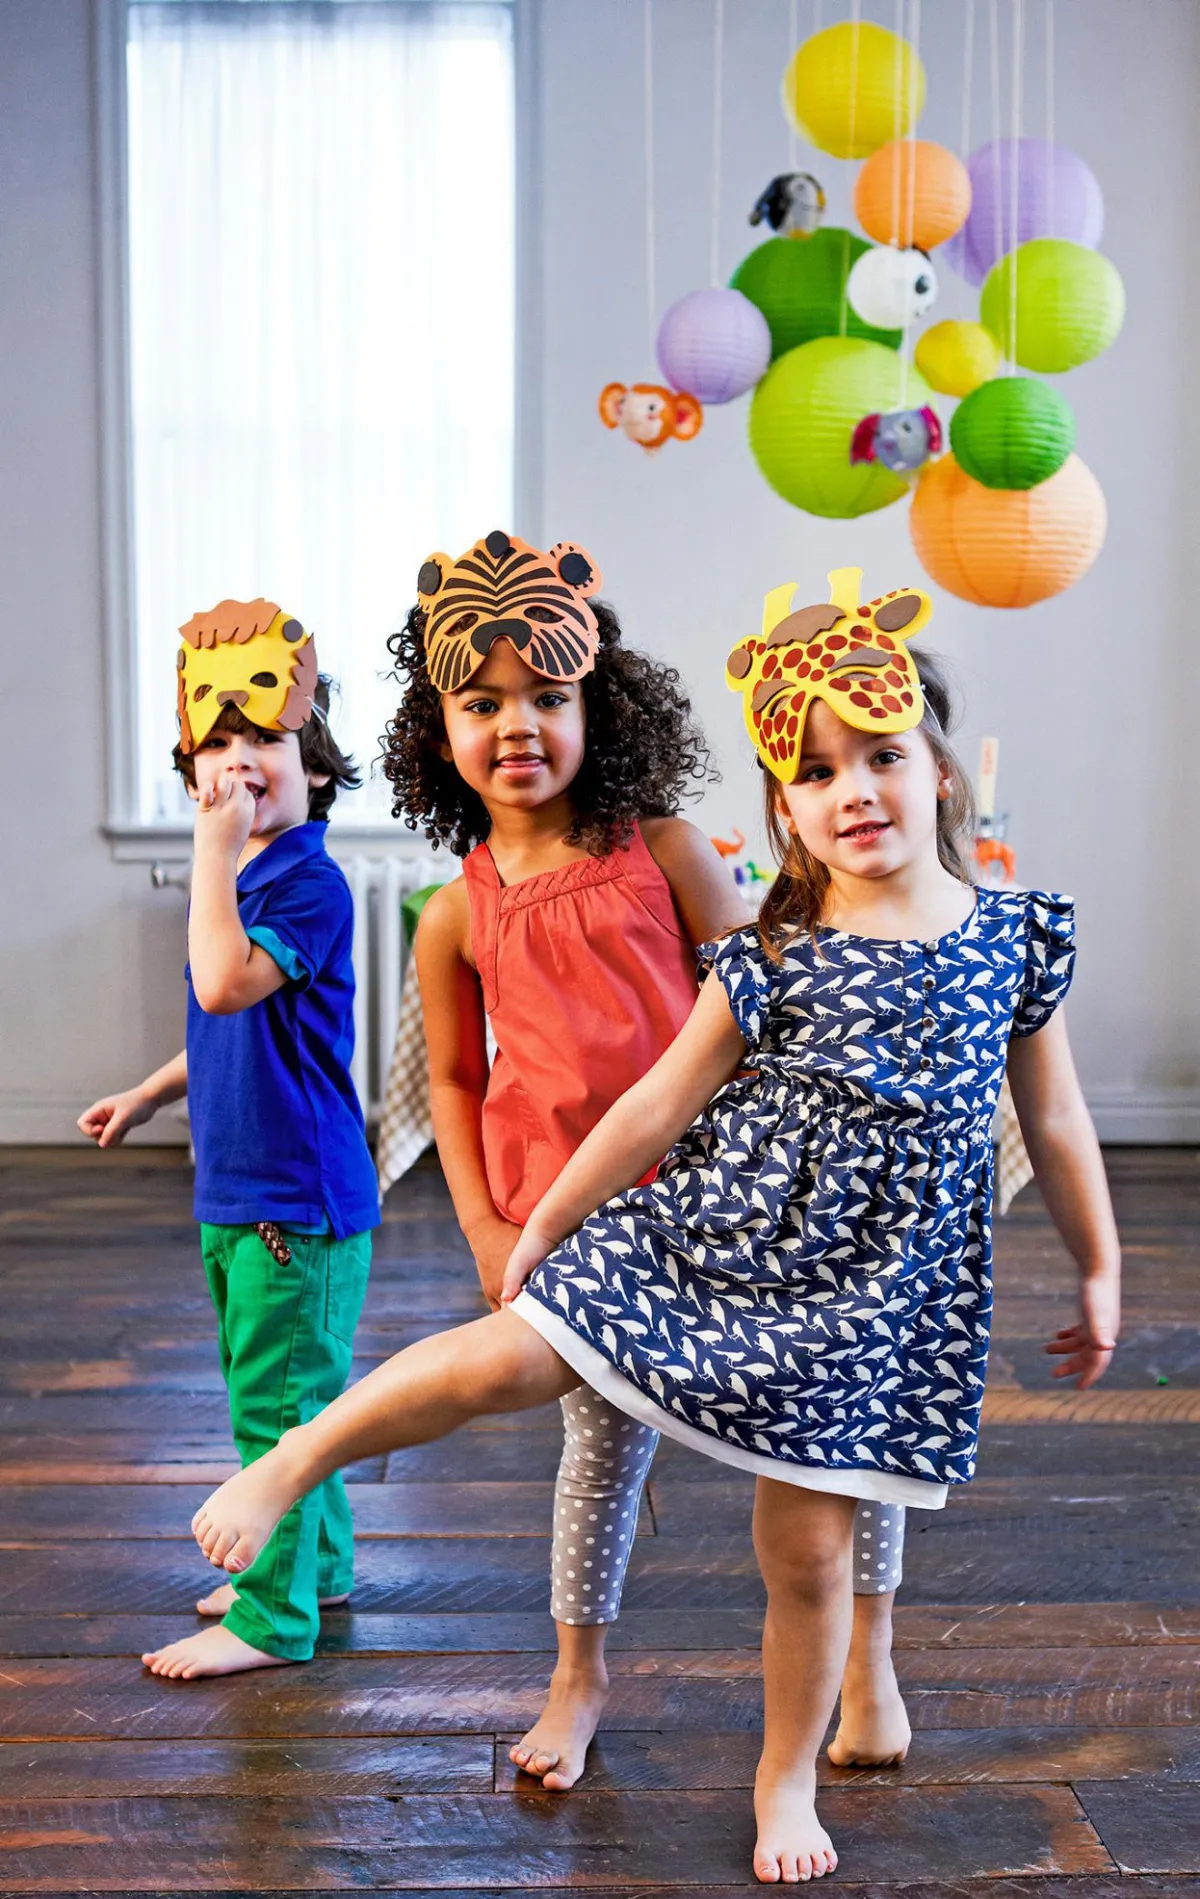 kindergeburtstag ideen kinder mit tiermasken schwebende ballons